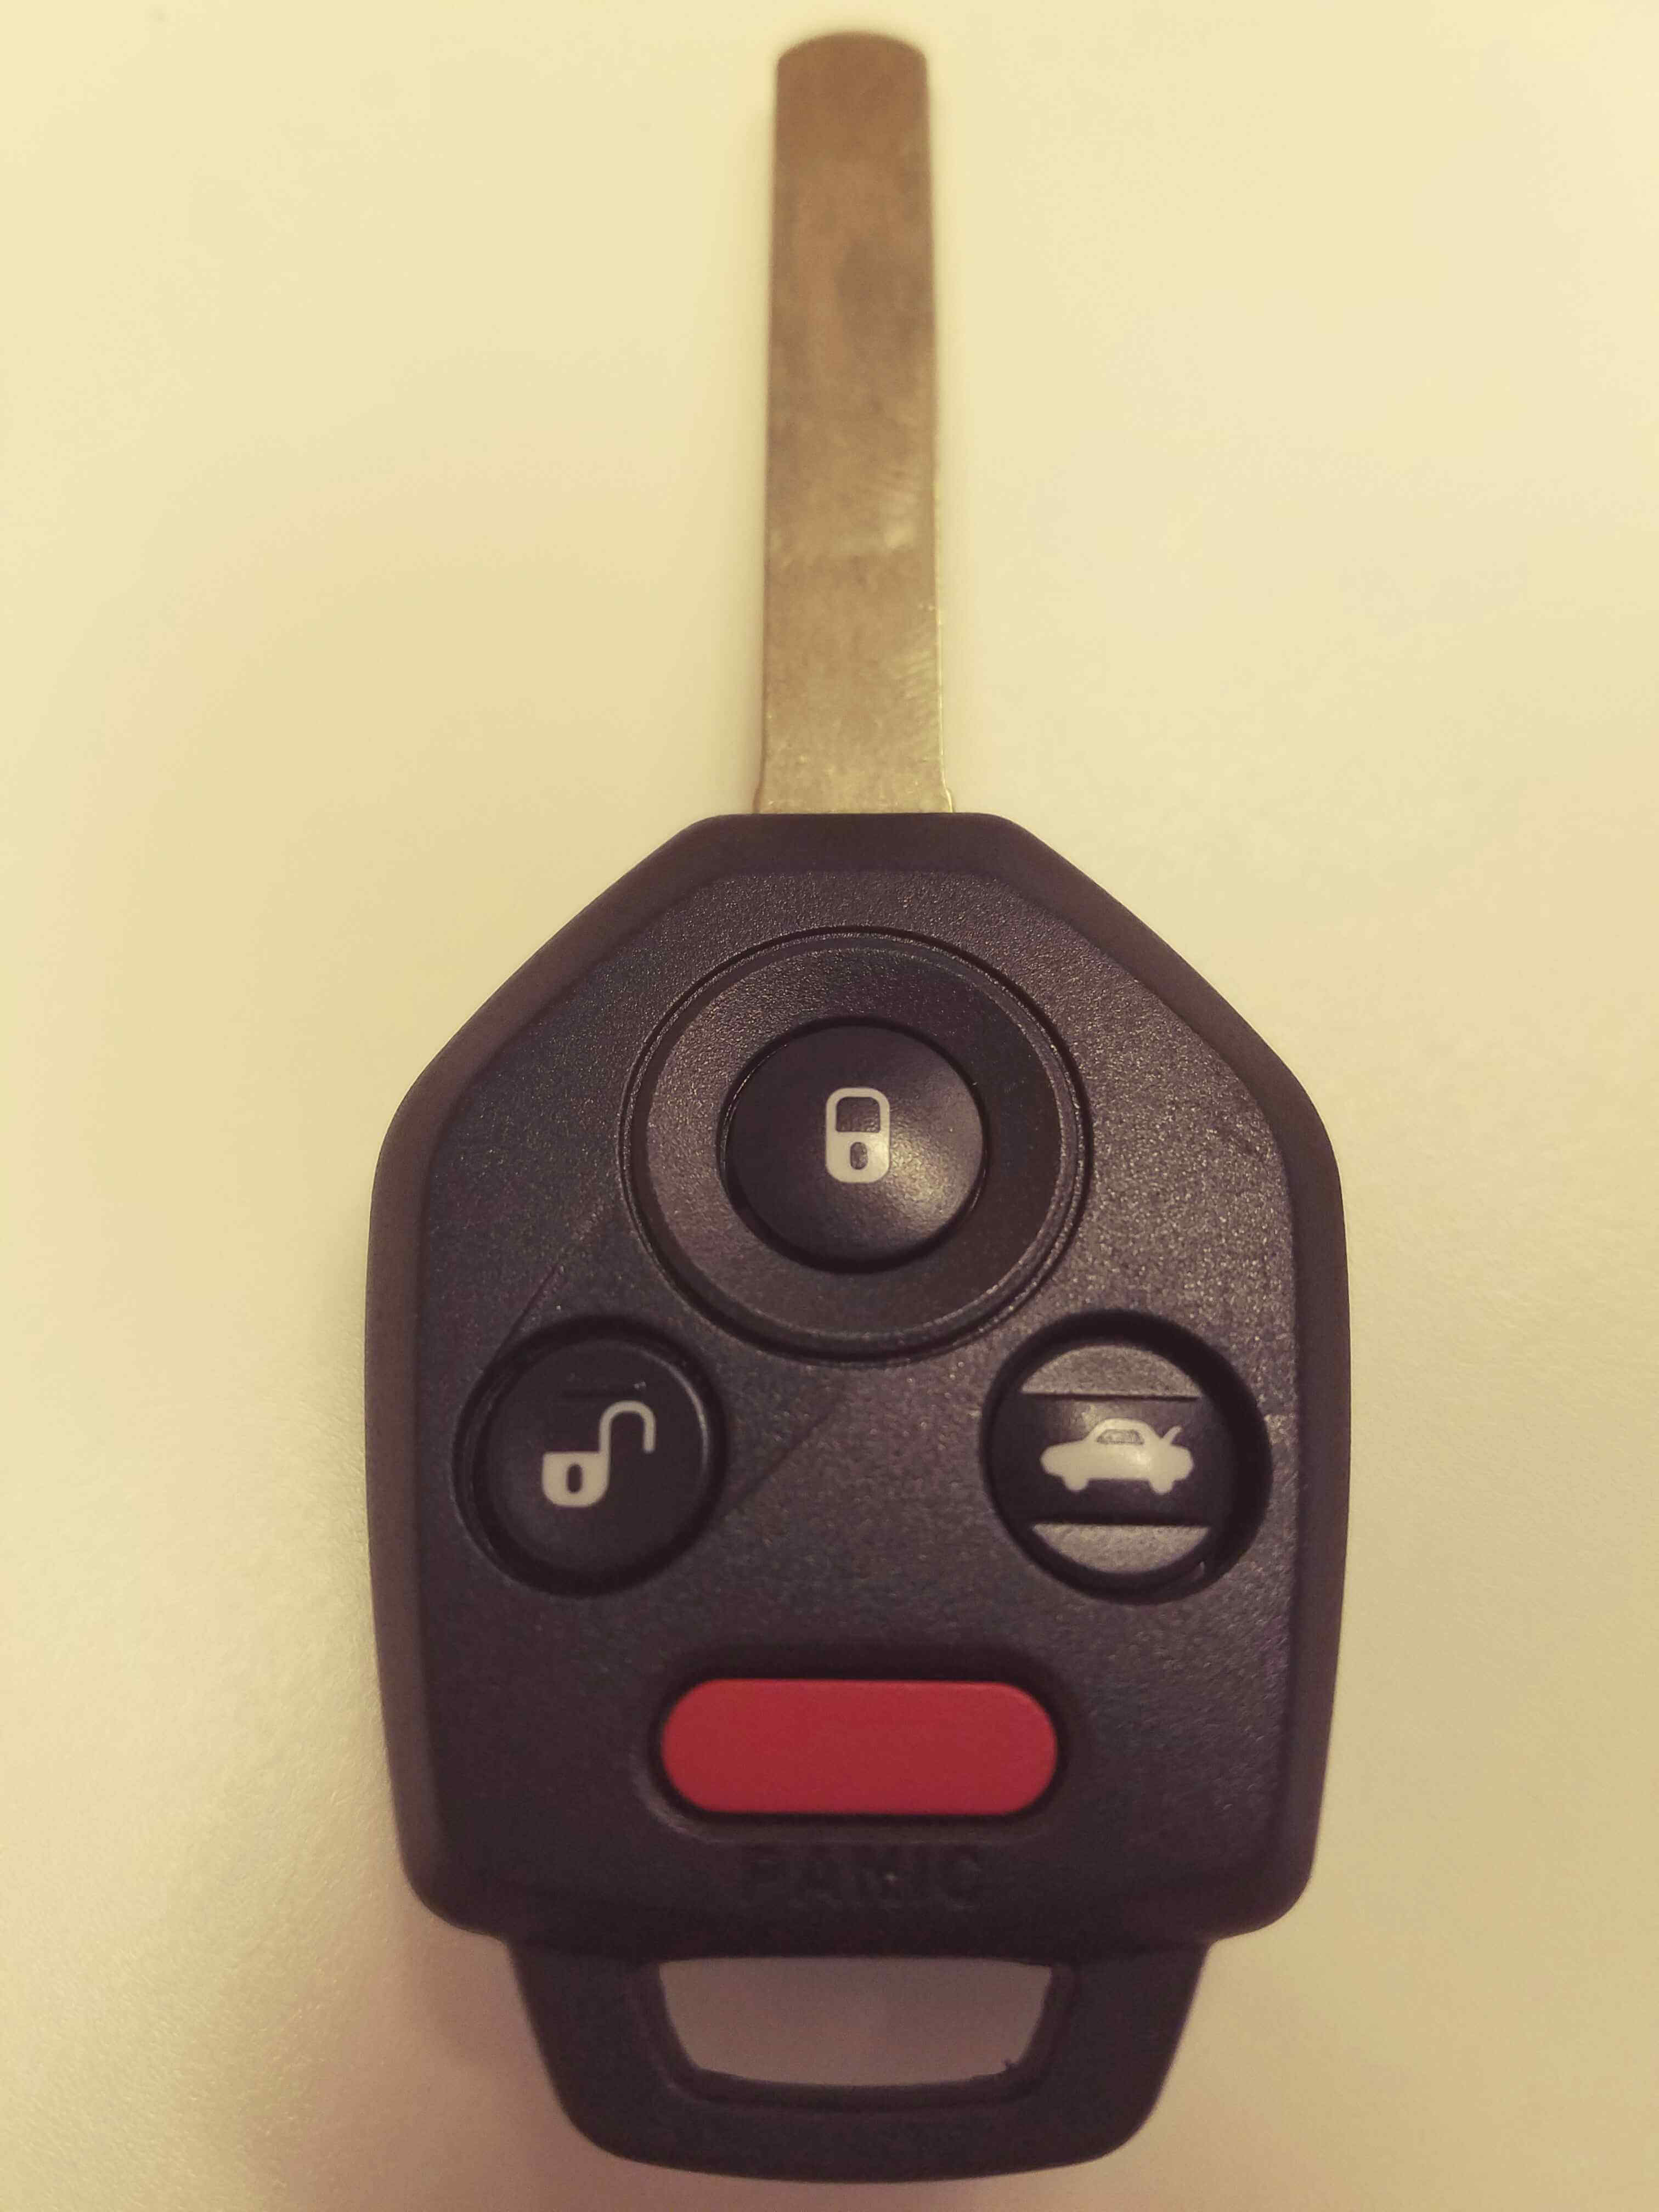 Subaru key fob